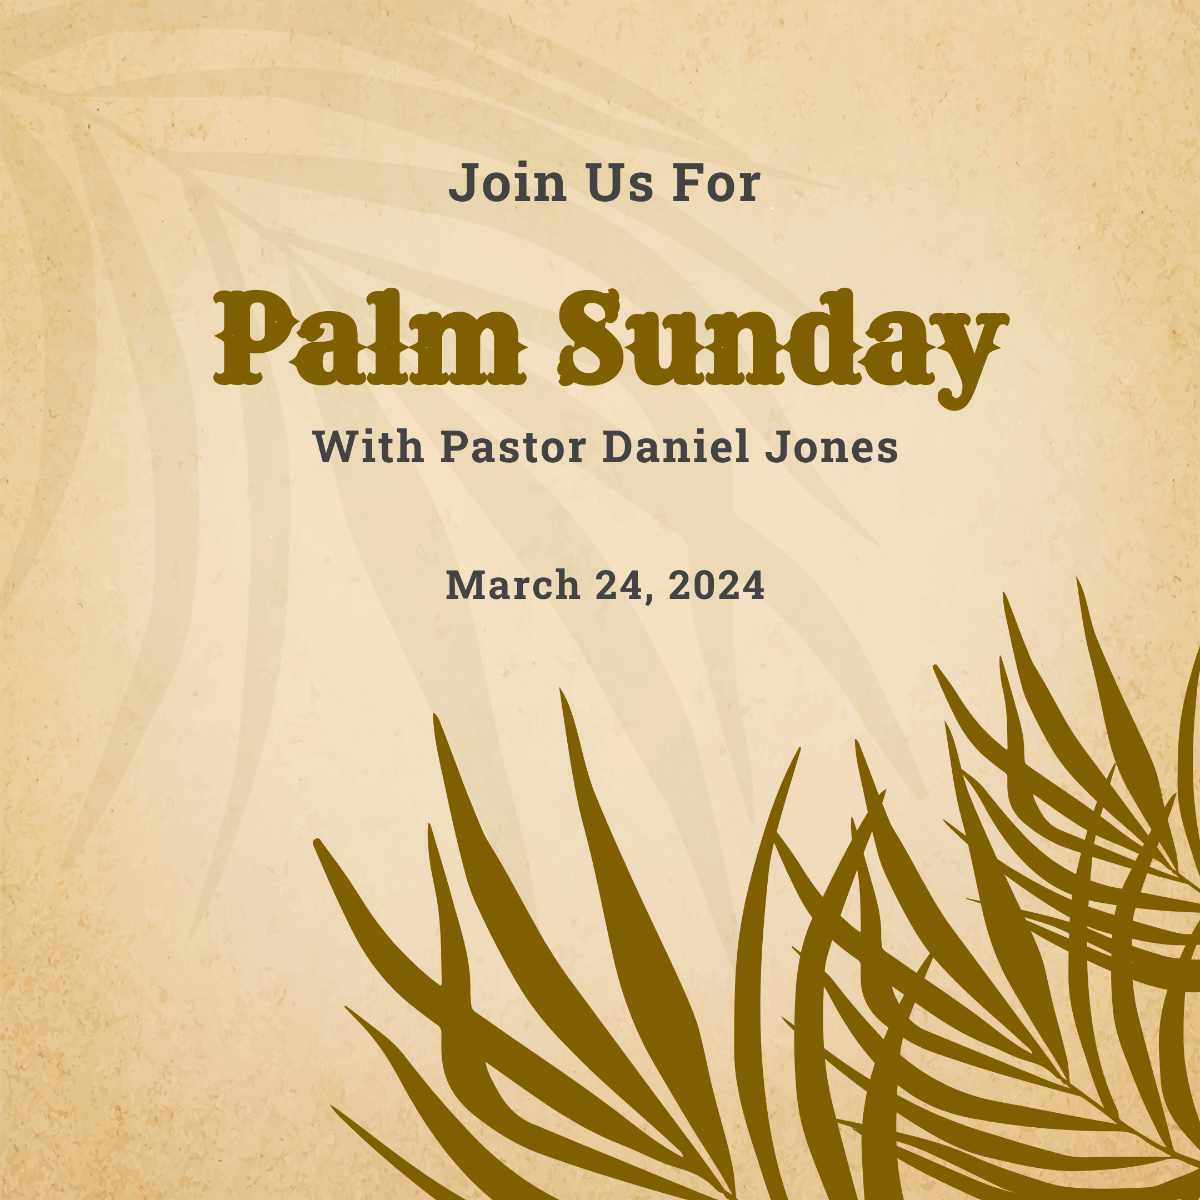 Free Vintage Palm Sunday Instagram Post Template